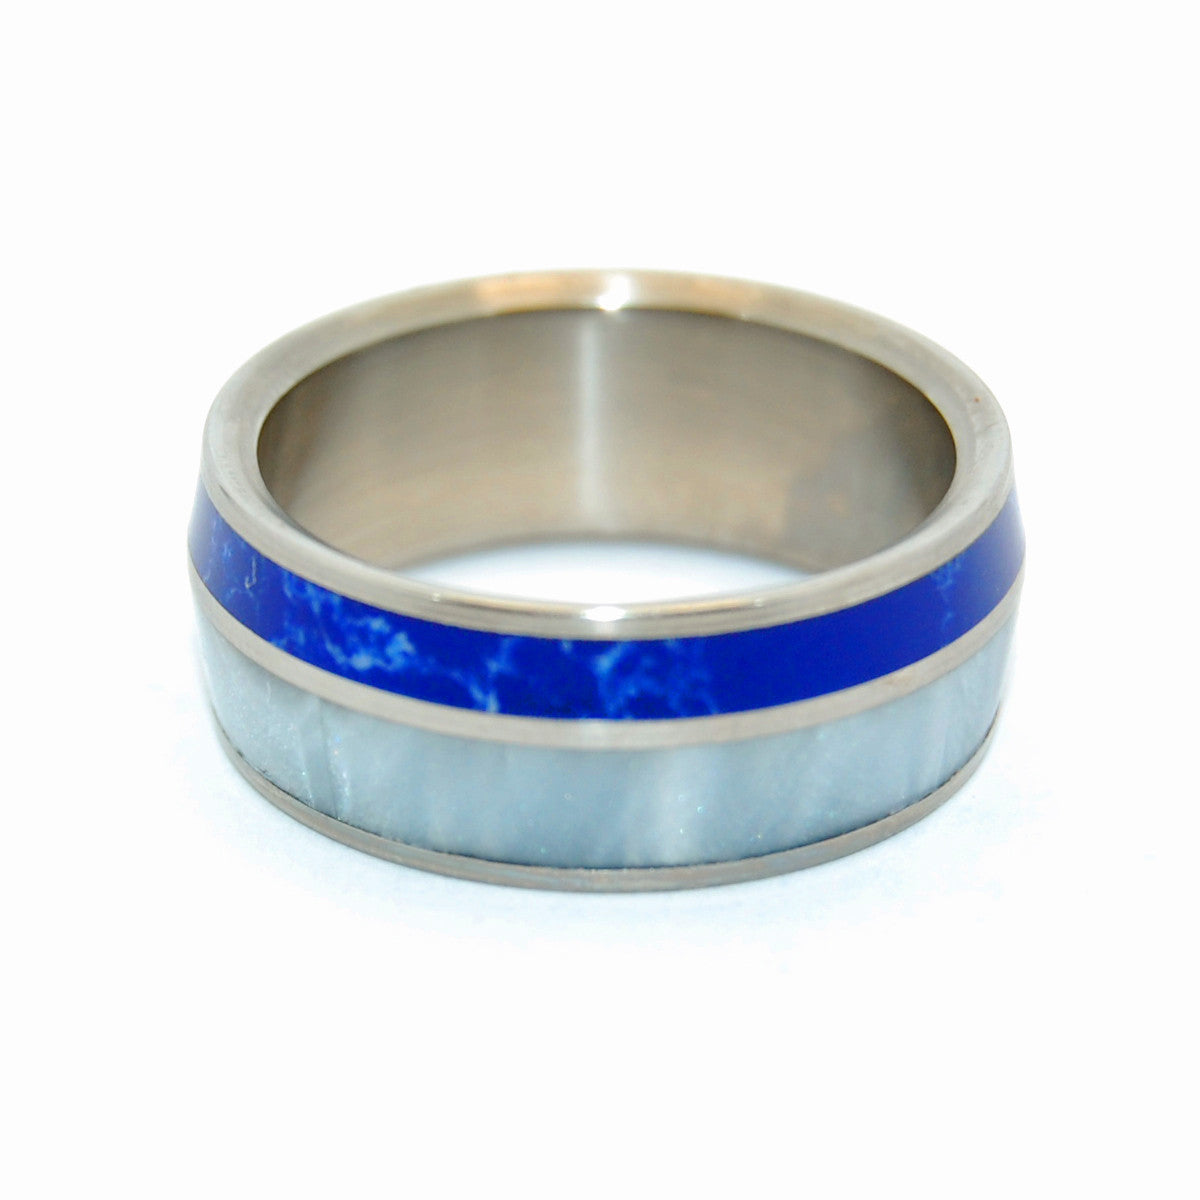 We'll Always Be | Stone Titanium Wedding Ring - Minter and Richter Designs